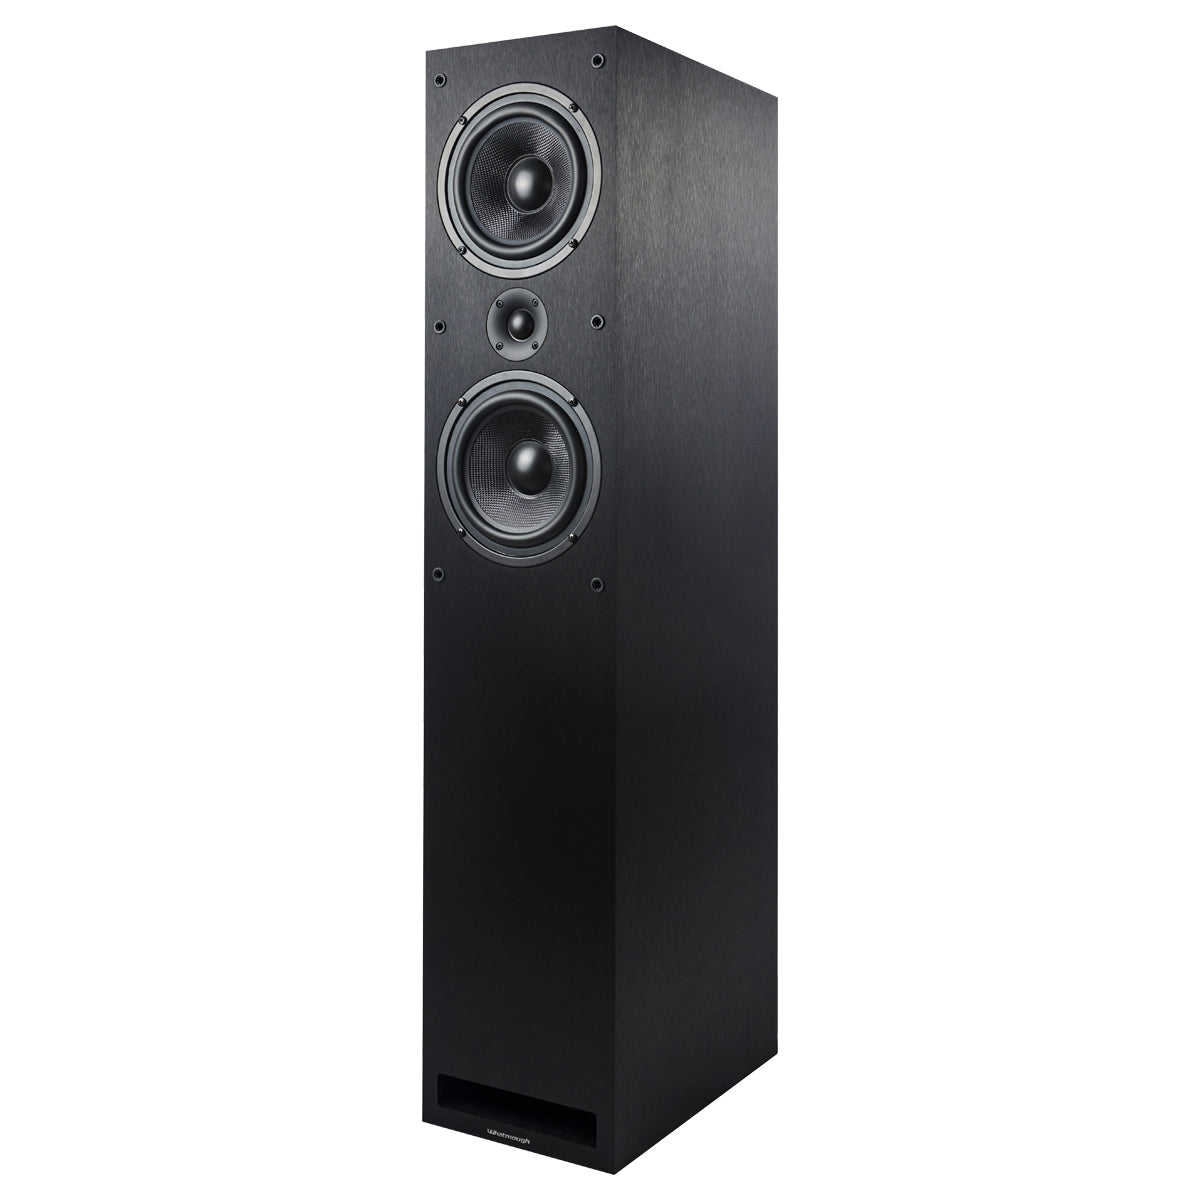 Whatmough Emotion WEFS265 2 Way Floorstanding Speaker - Black - The Audio Experts